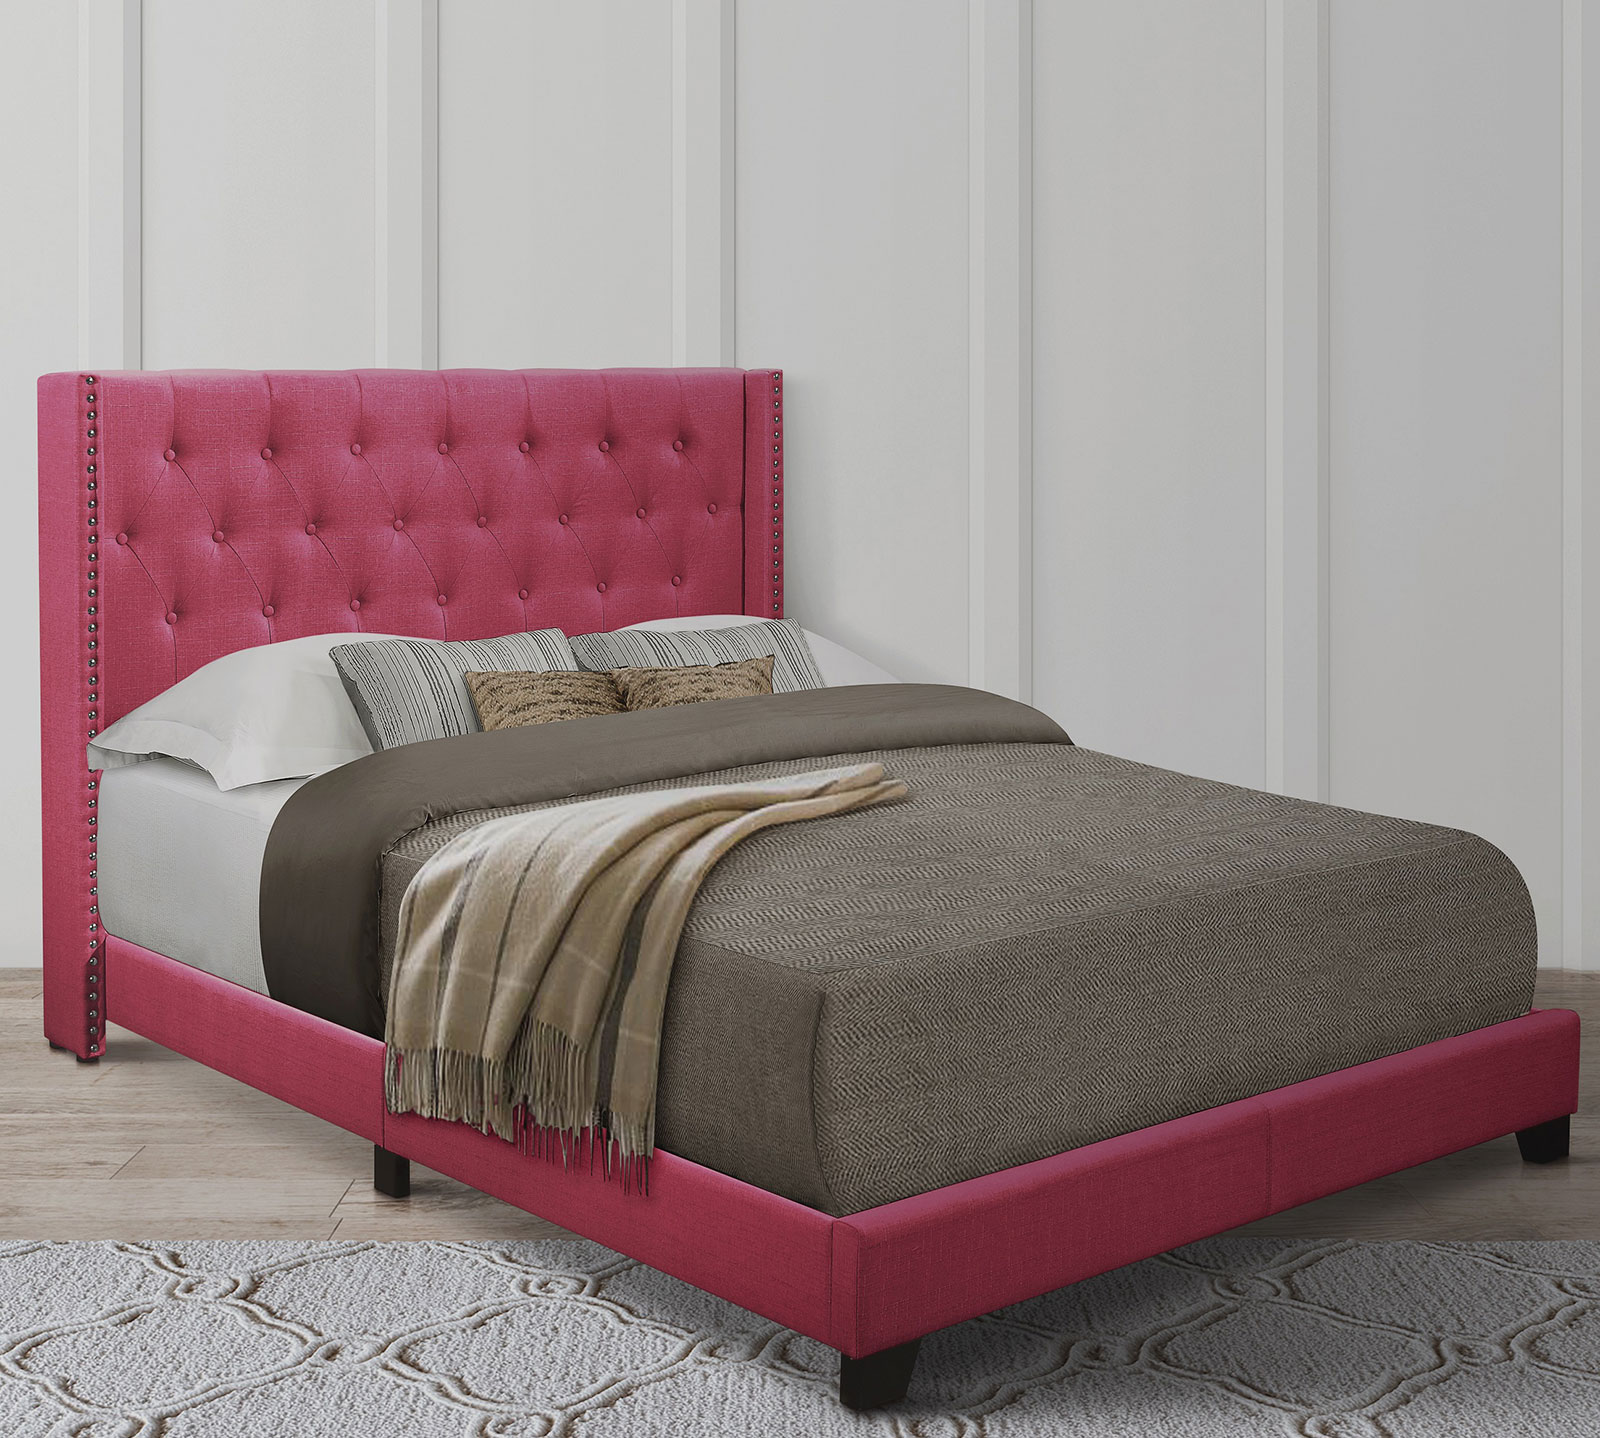 Homelegance Upholstered Bed Set | Queen | Avery Bed Frame & Headboard | Pink